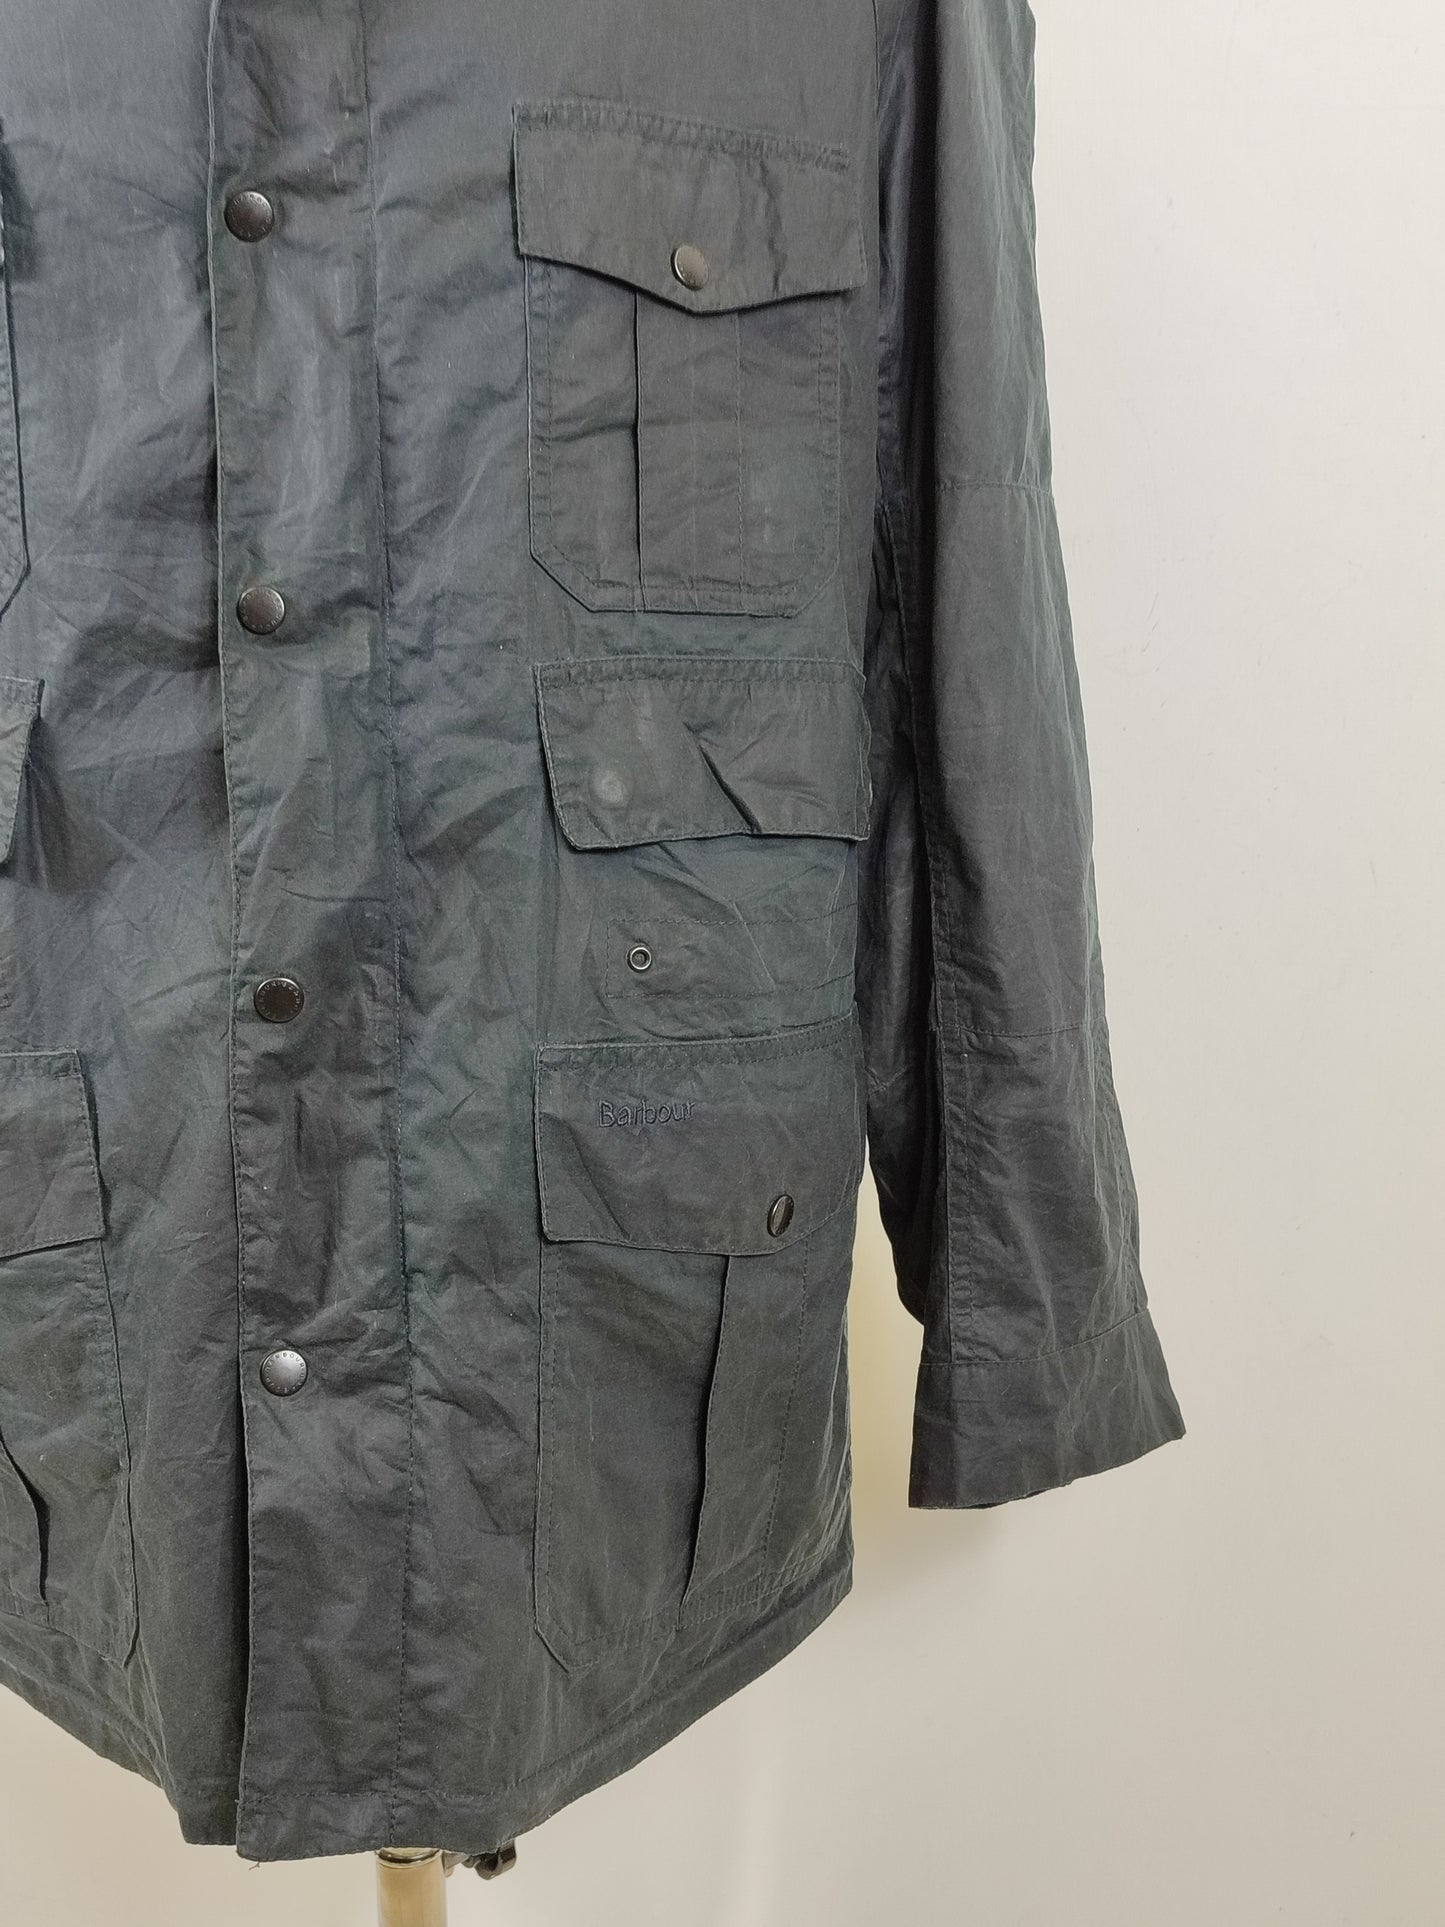 Giacca Barbour Blu Cavendish da uomo Large -Man Navy Cavendish Jacket size Large